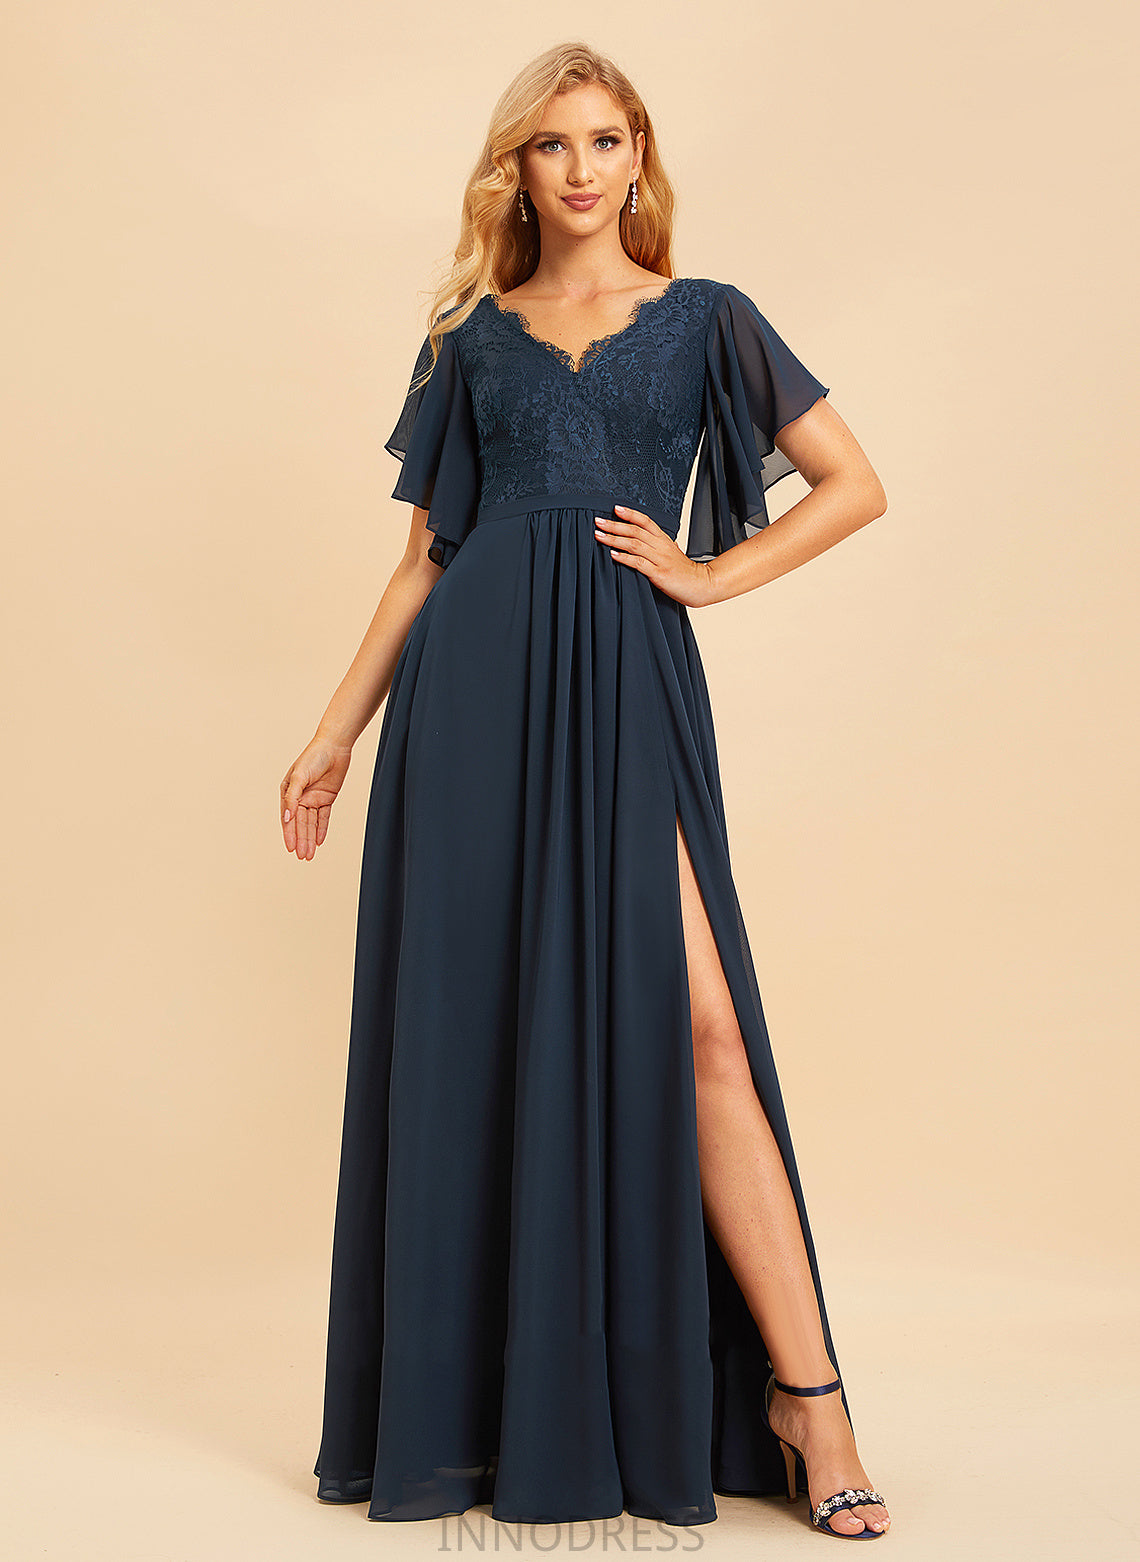 Silhouette Neckline Lace Floor-Length Fabric A-Line V-neck Length Embellishment SplitFront Courtney Natural Waist Bridesmaid Dresses